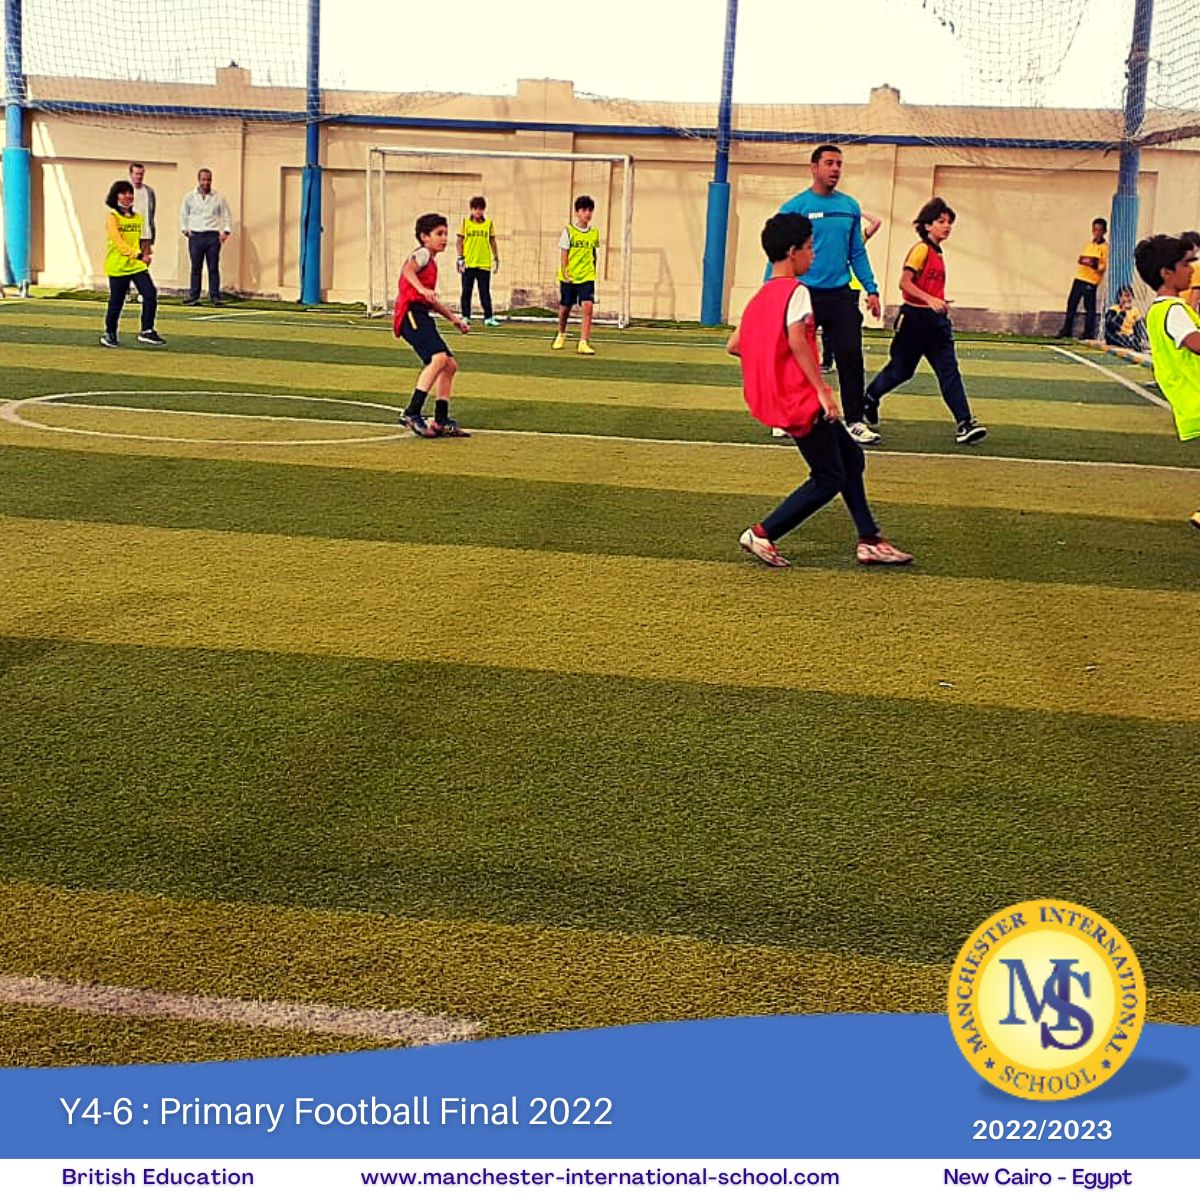 Y4-6 : Primary Football Final 2022